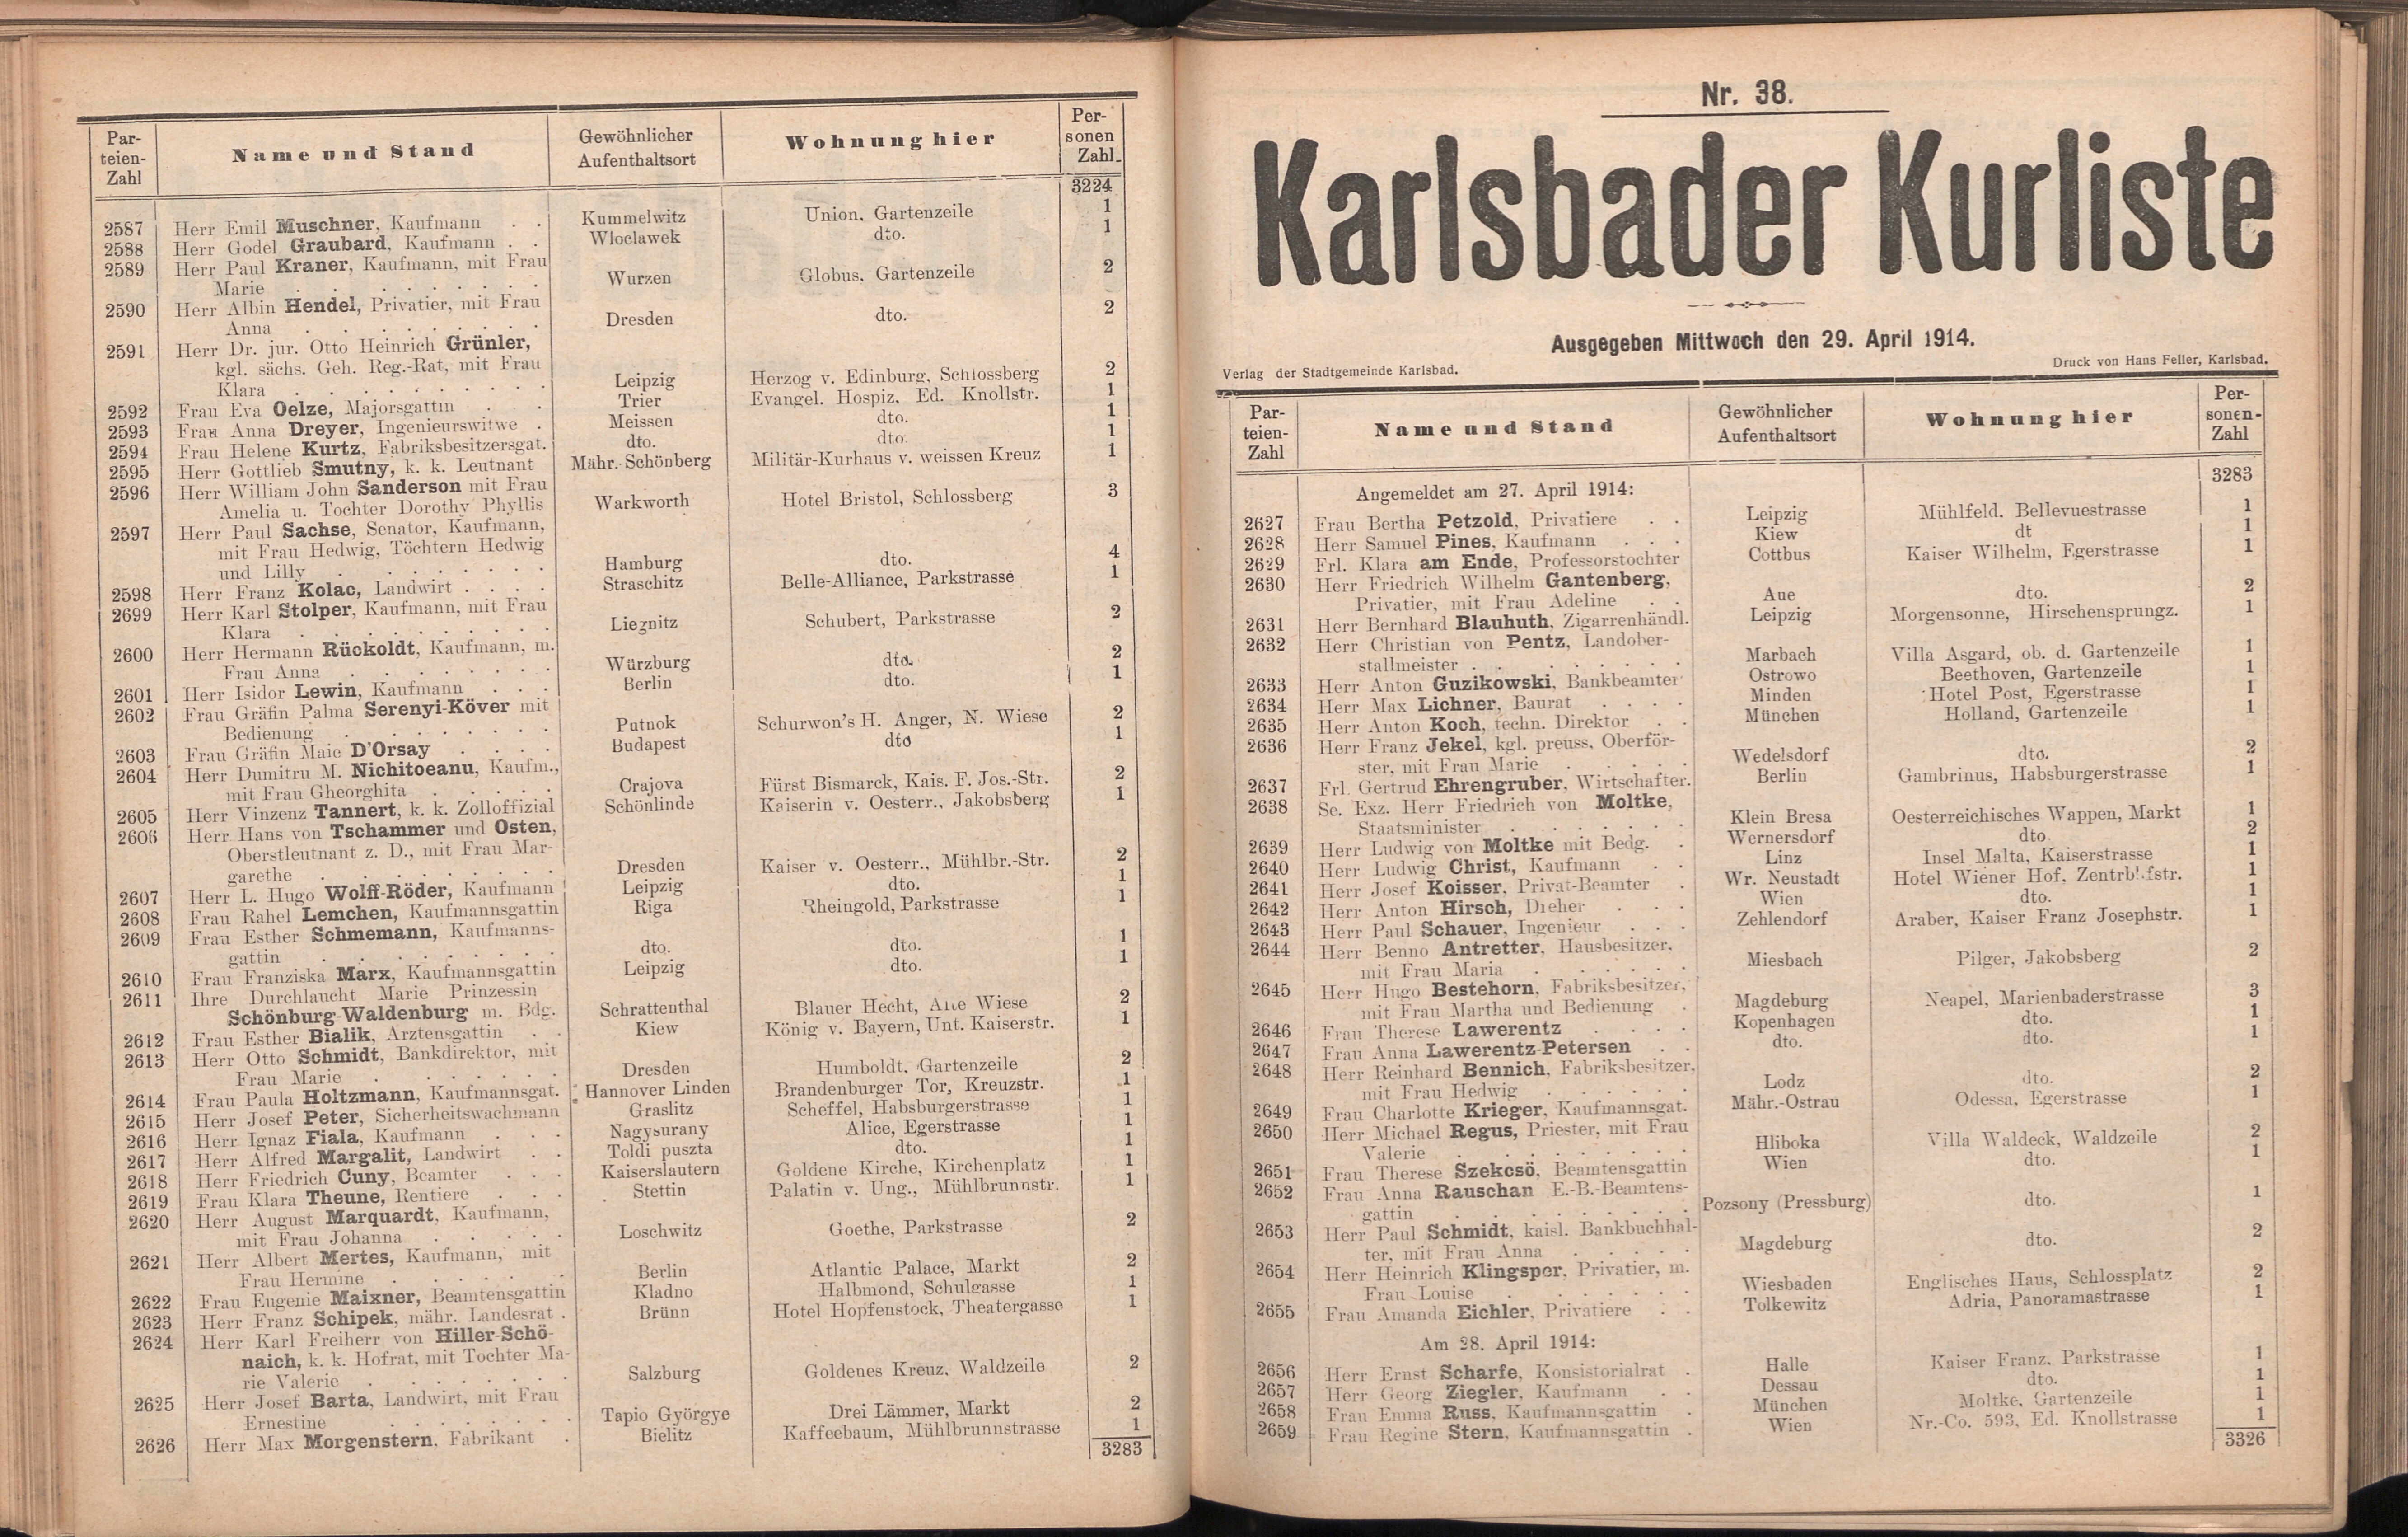 119. soap-kv_knihovna_karlsbader-kurliste-1914_1190